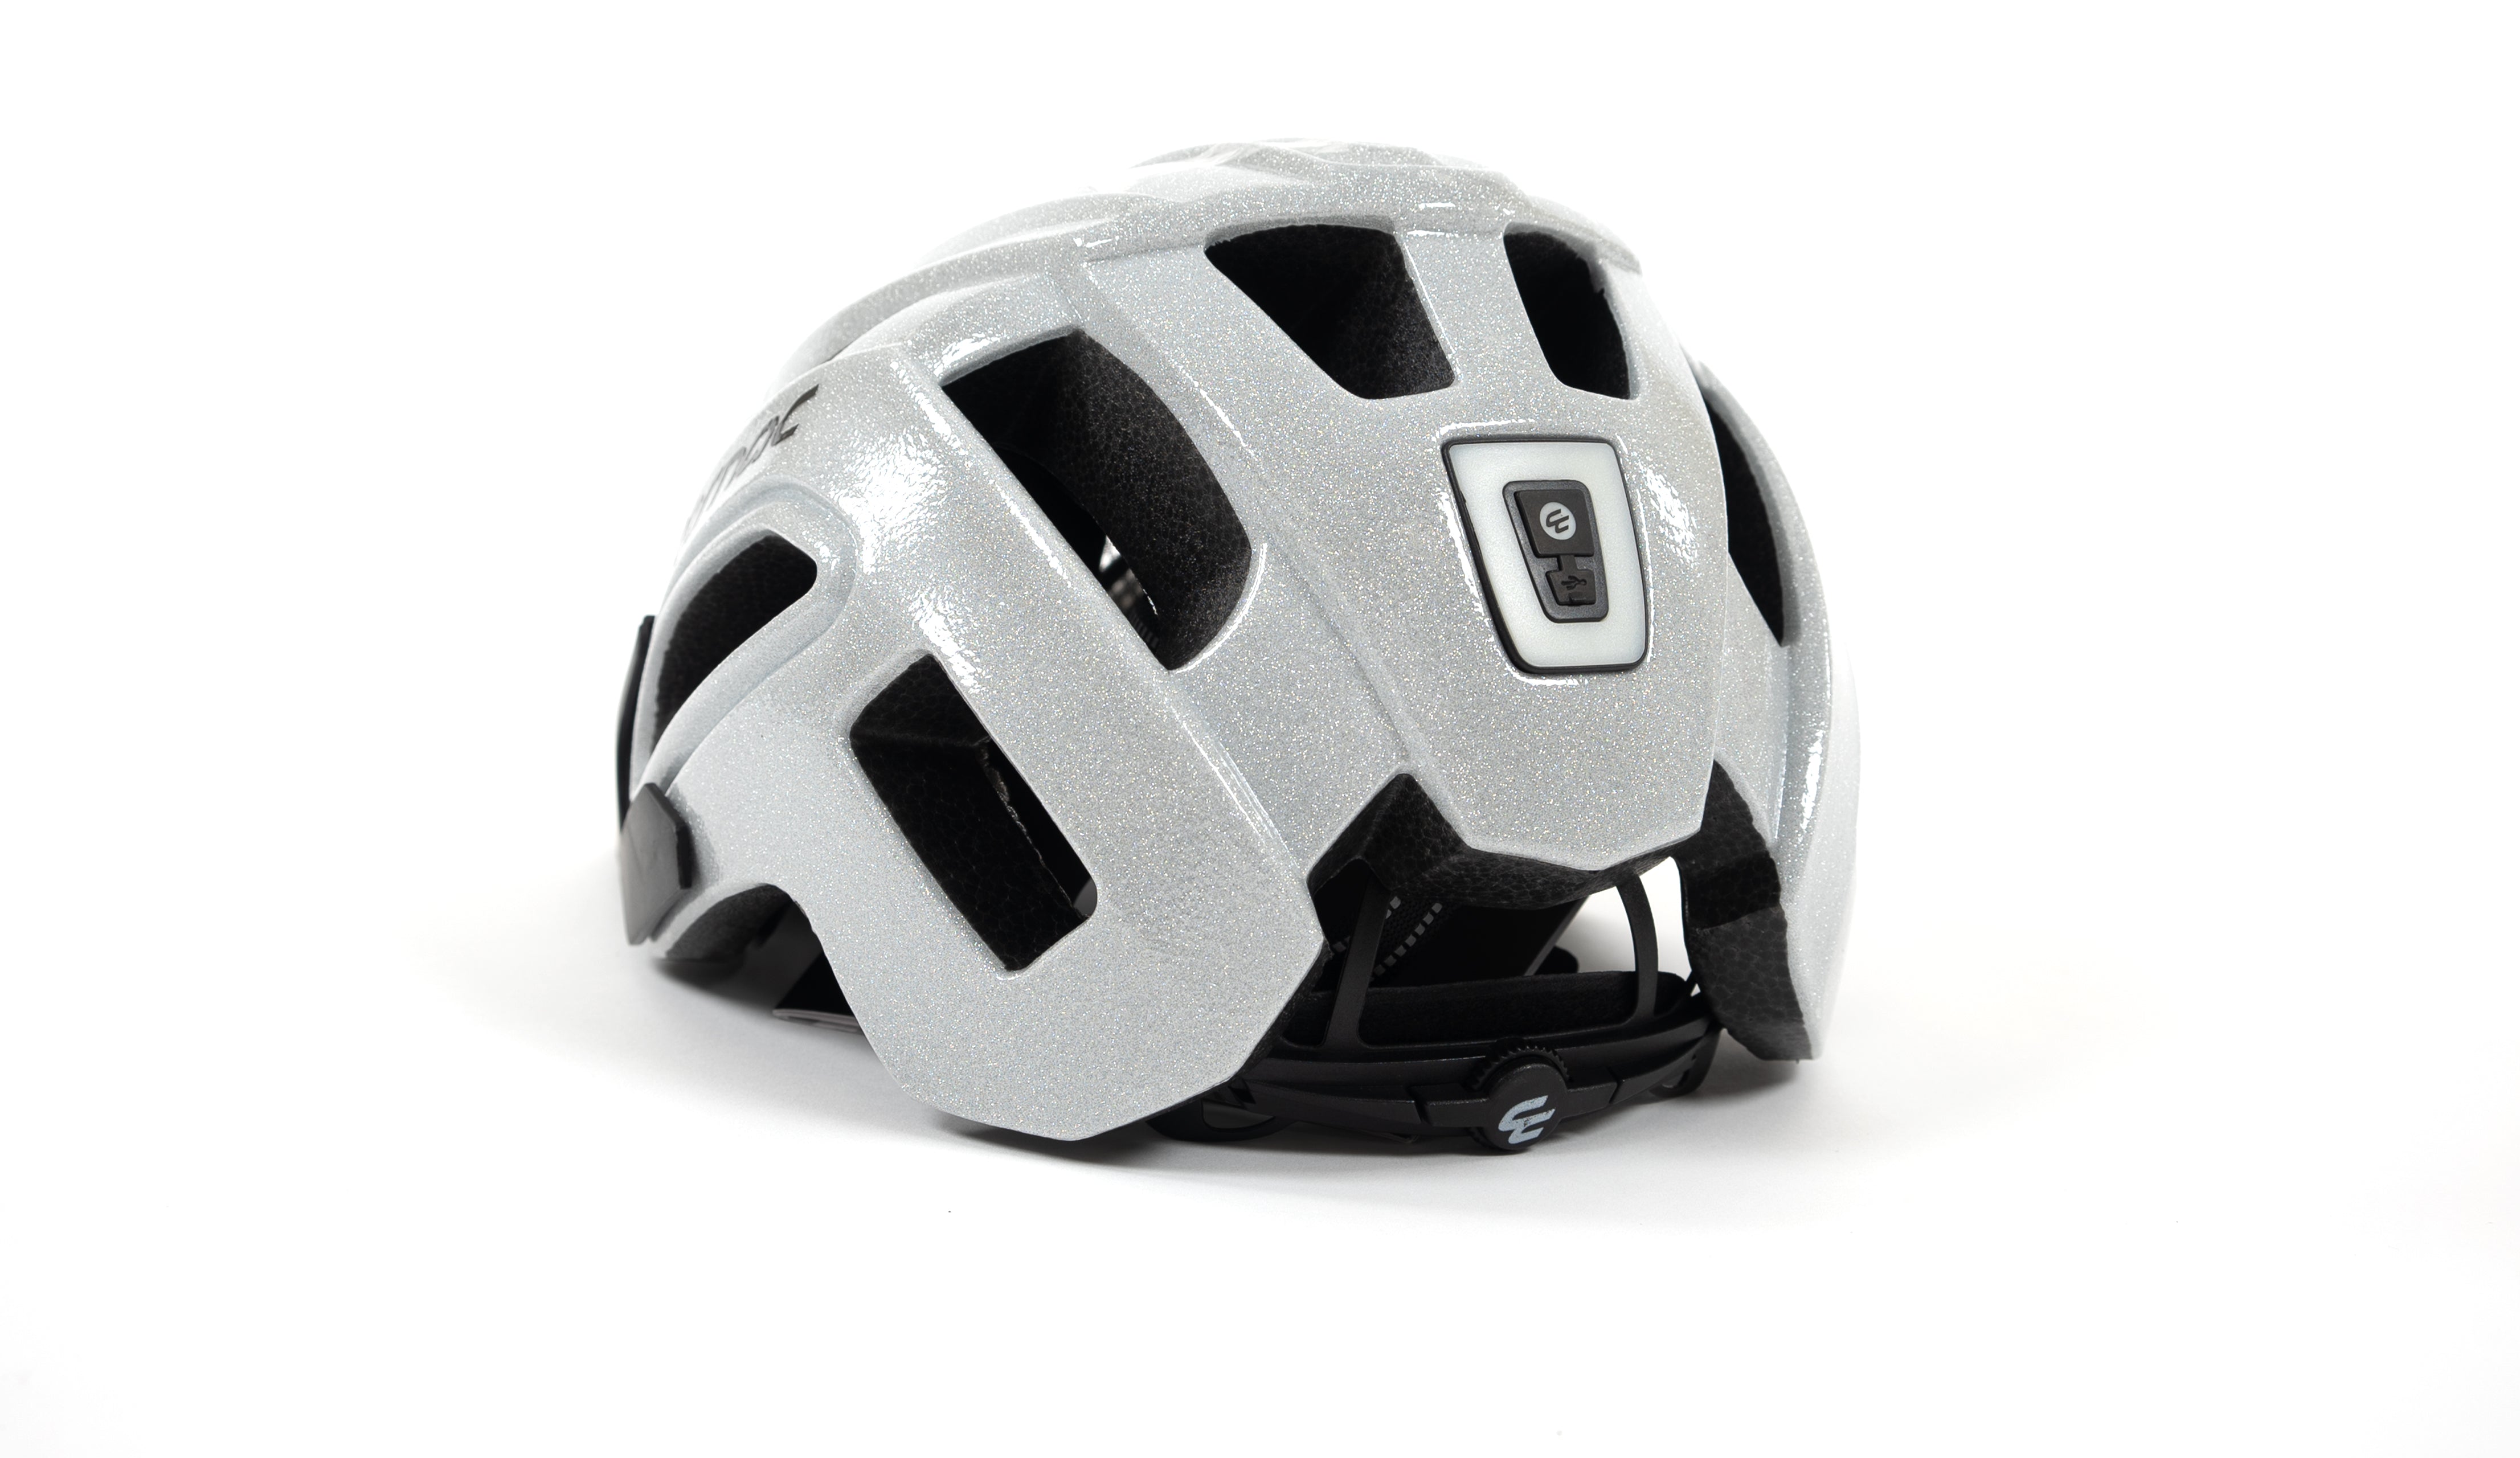 Carnac Enduro LED Retroreflective MTB Helmet